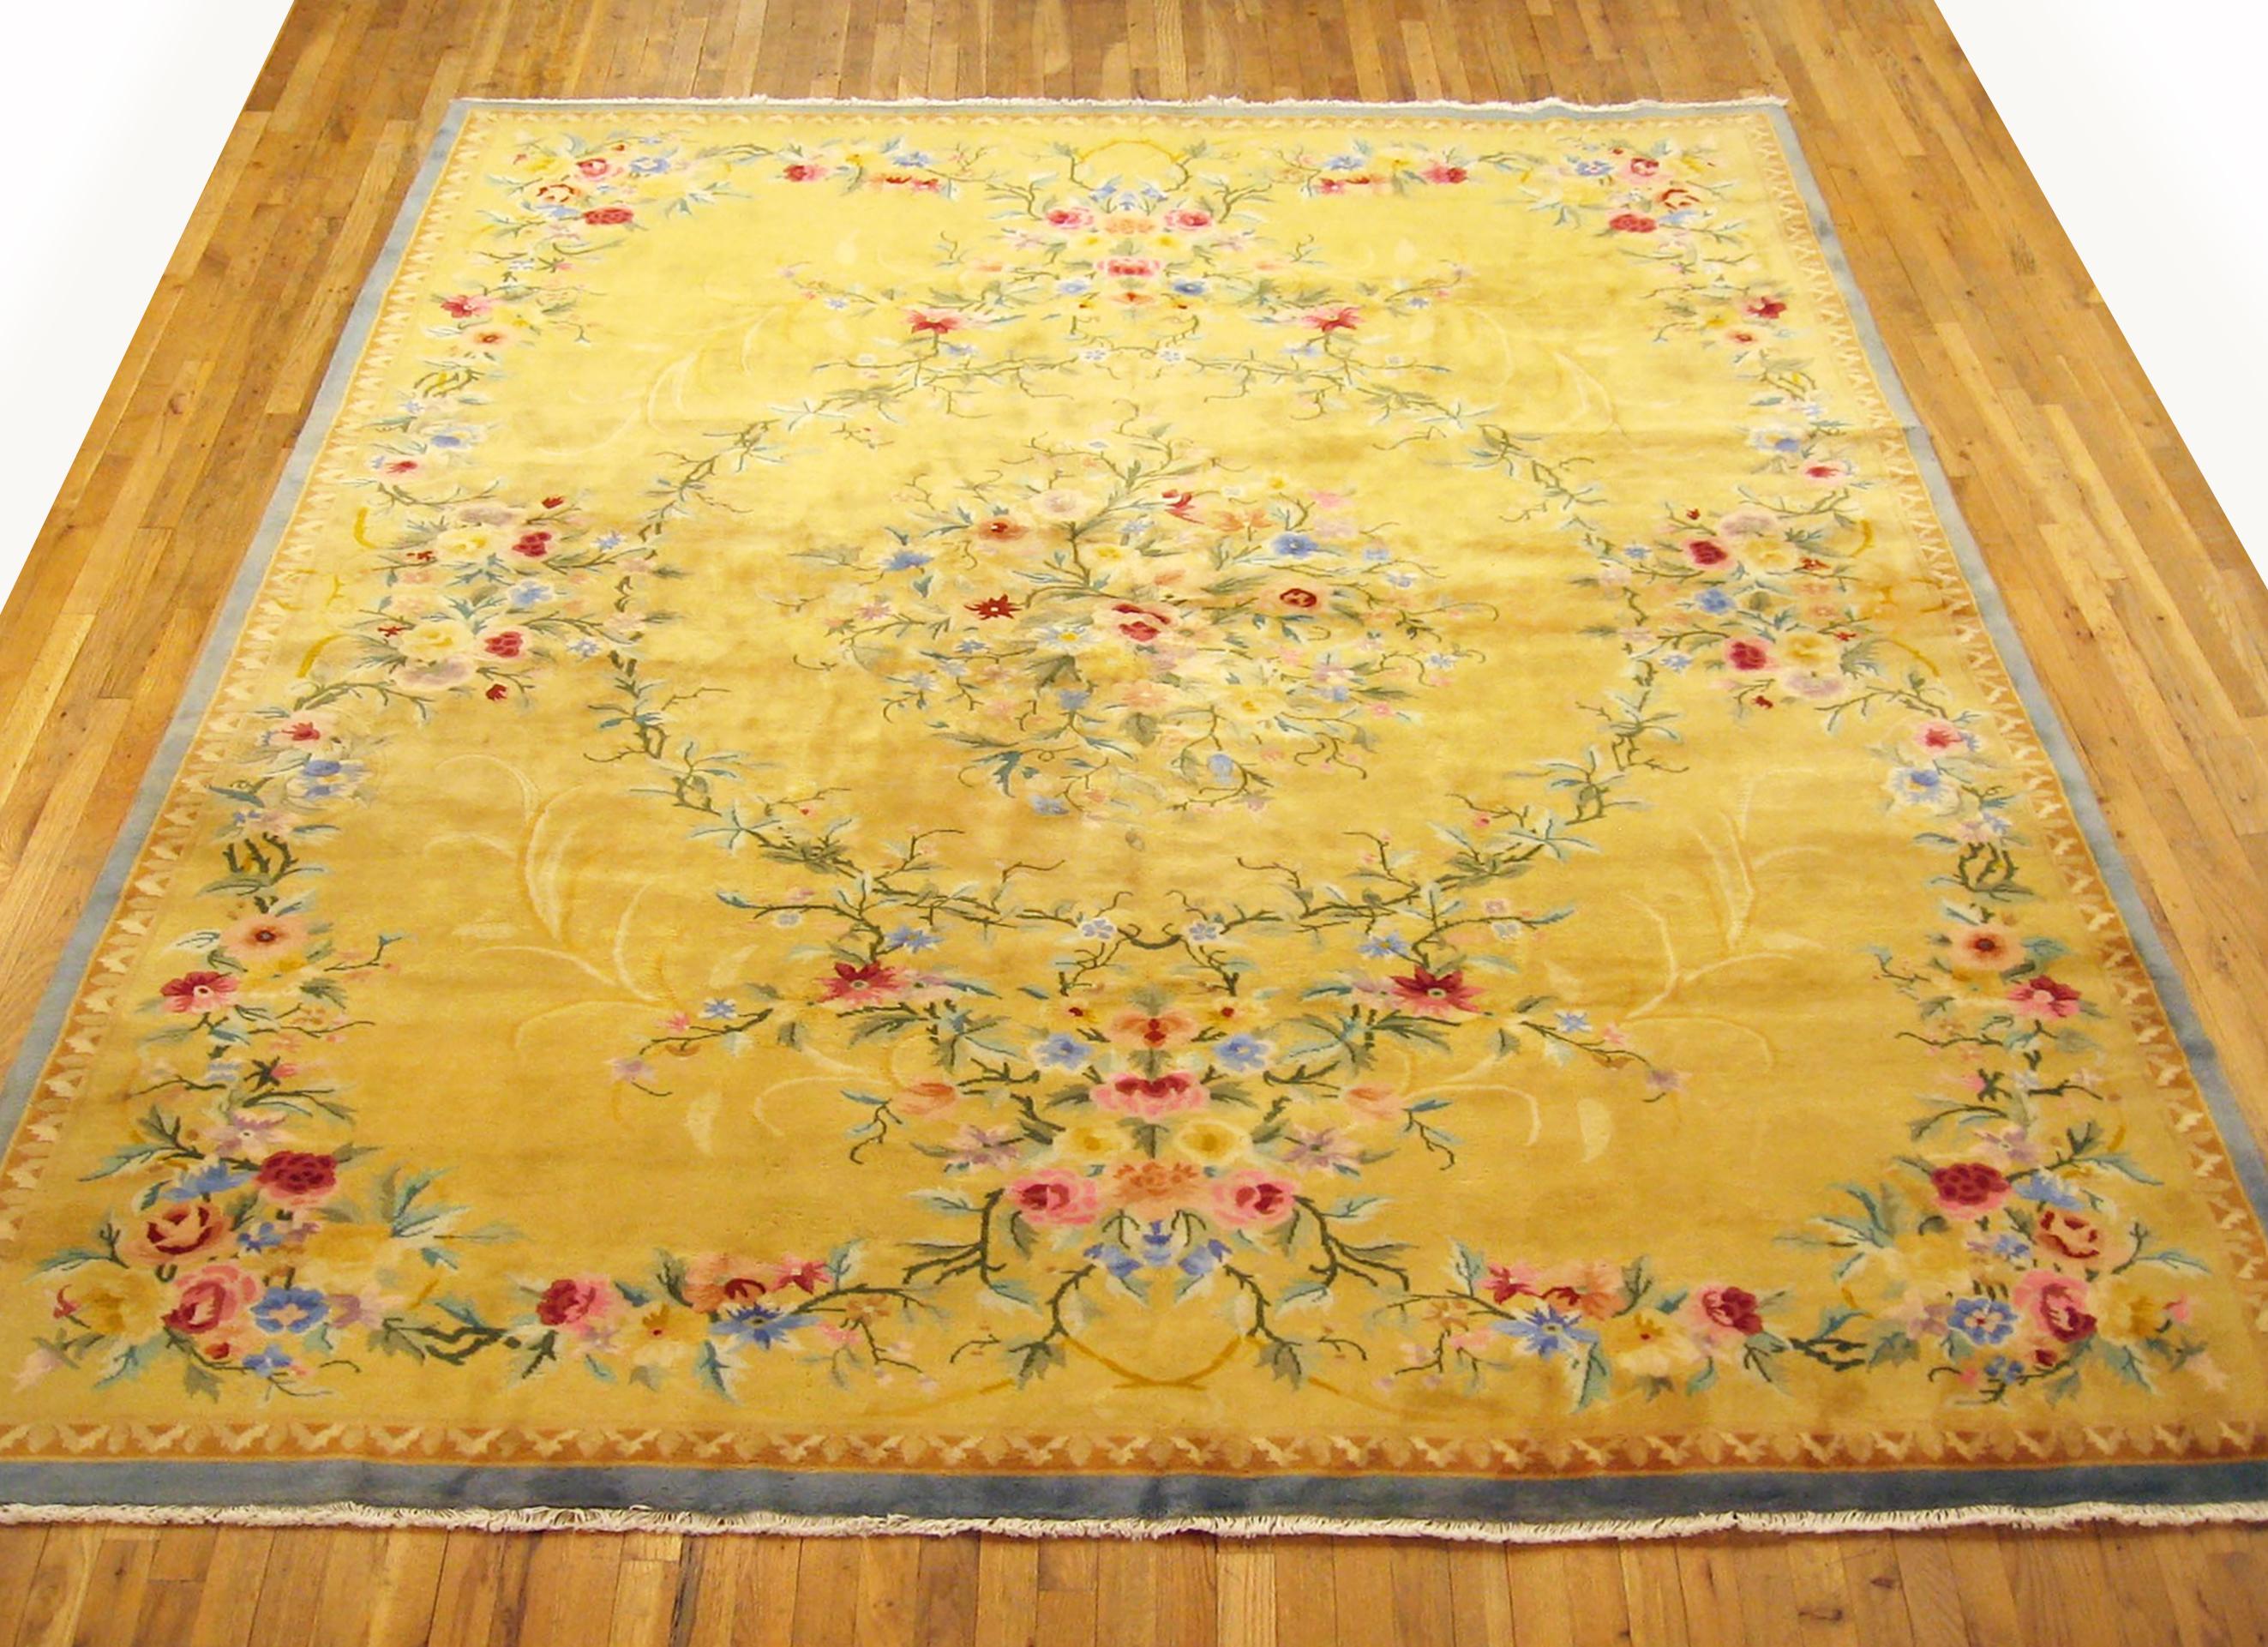 Antique Chinese Oriental carpet, size 11'5